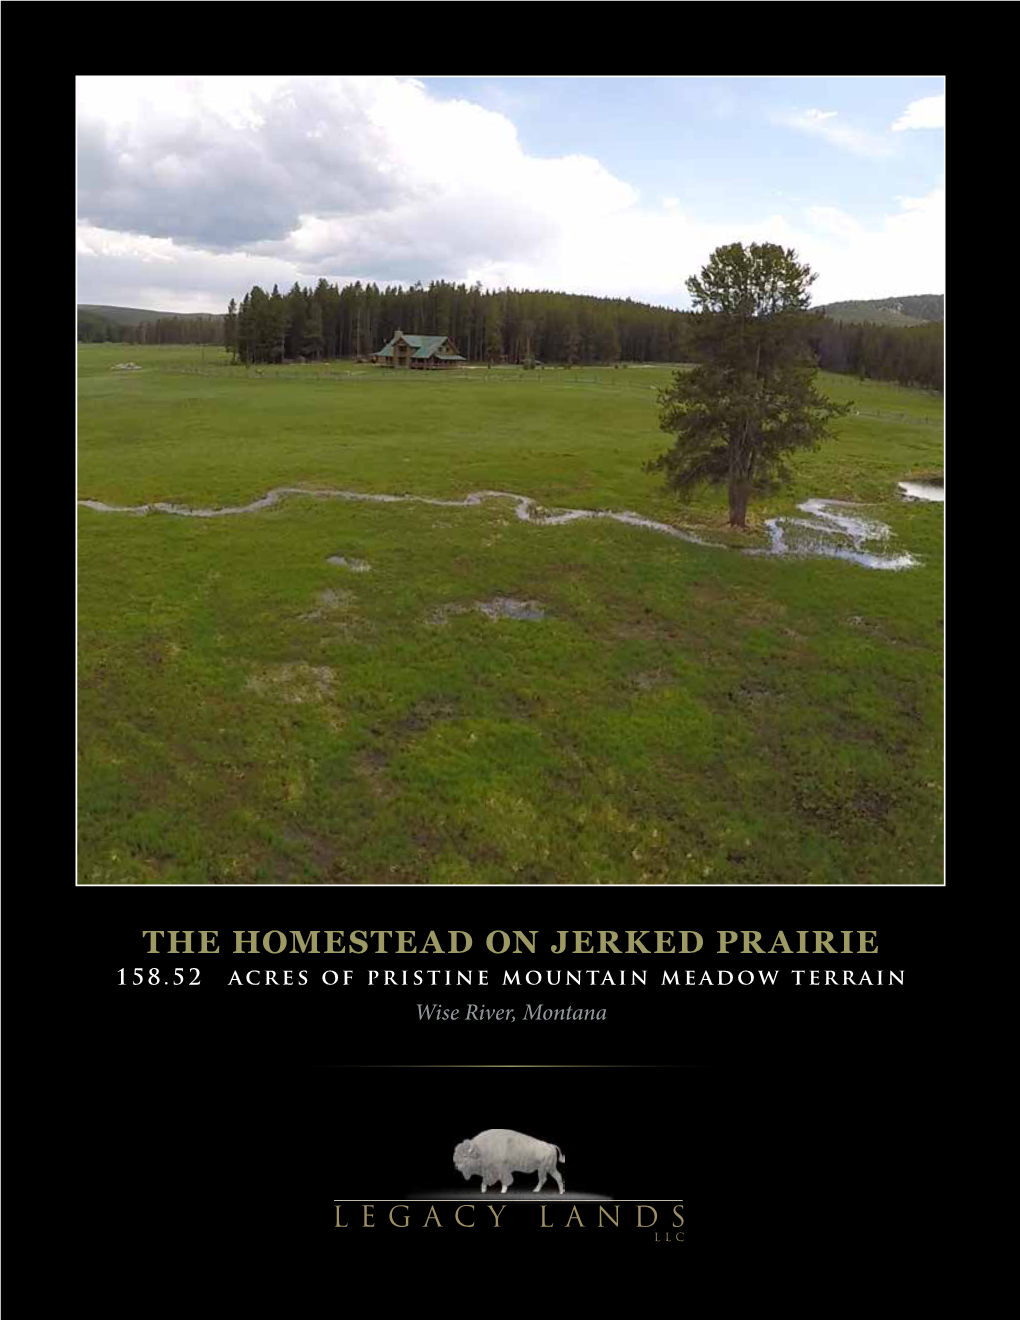 The Homestead on Jerked Prairie